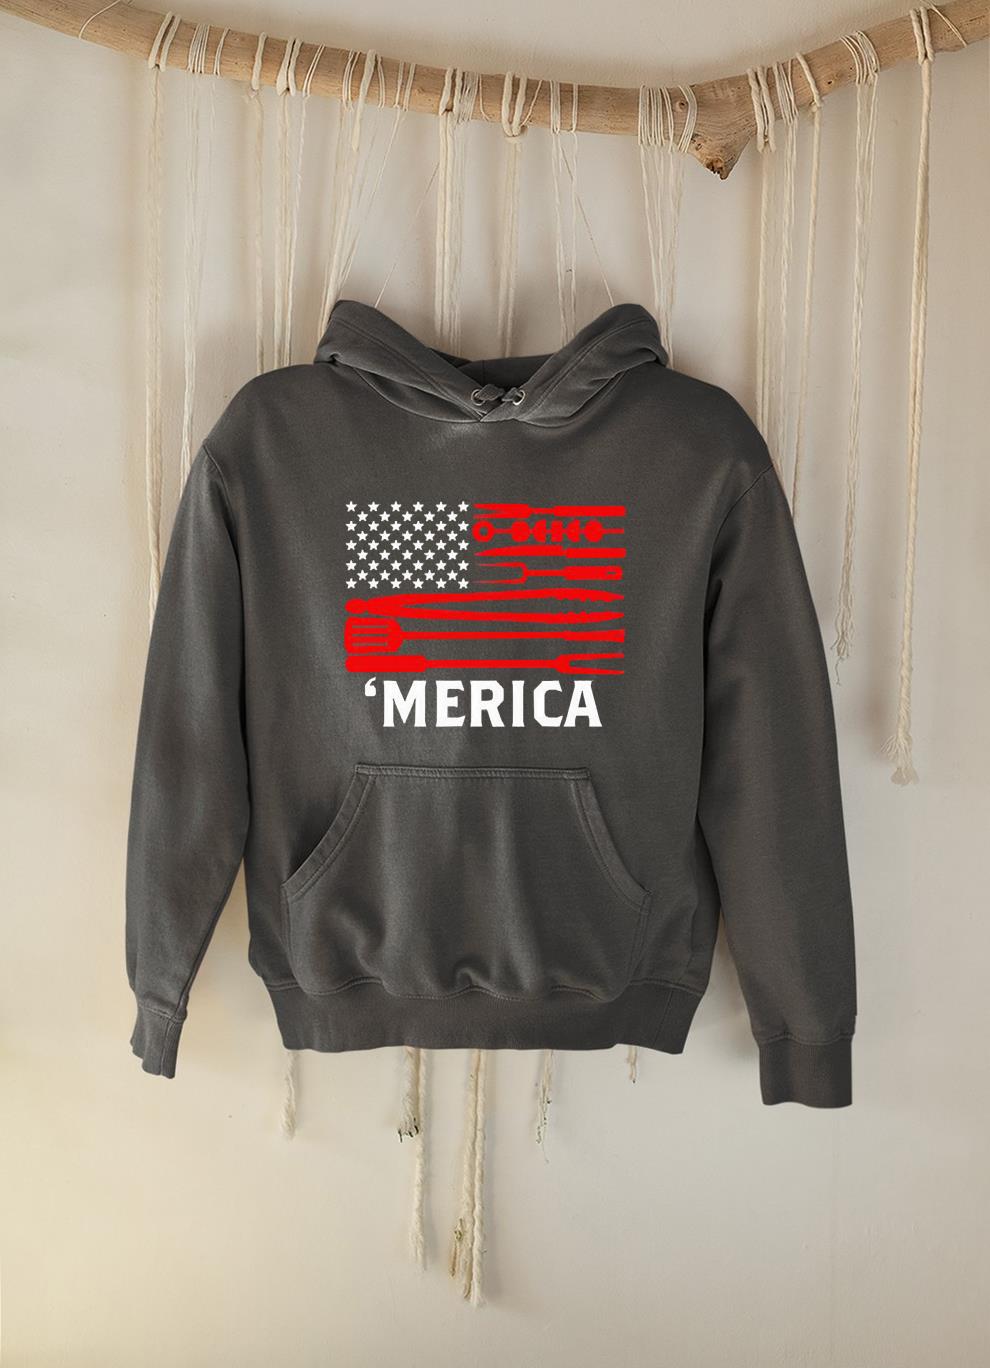 Merica BBQ America flag shirt